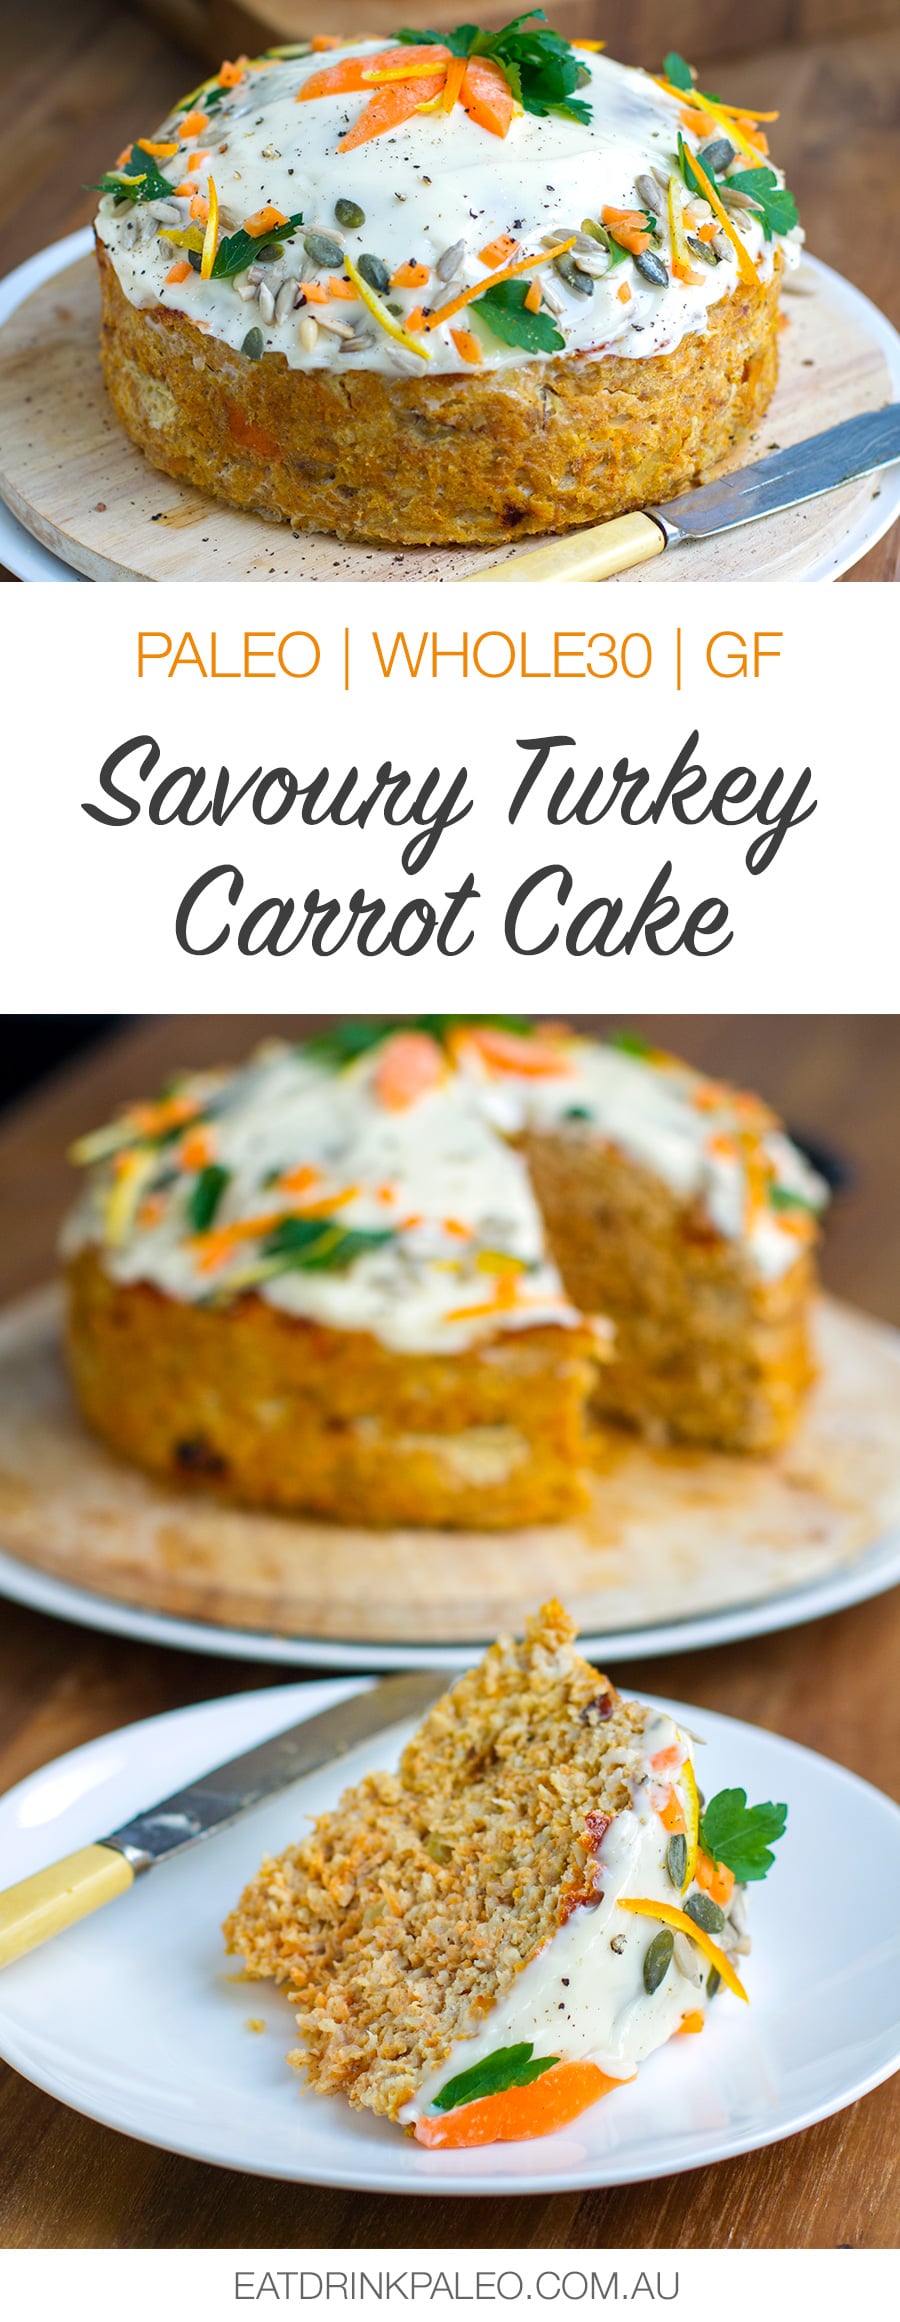 Savoury Turkey Carrot Cake (Paleo, Gluten-free, Whole30 friendly)